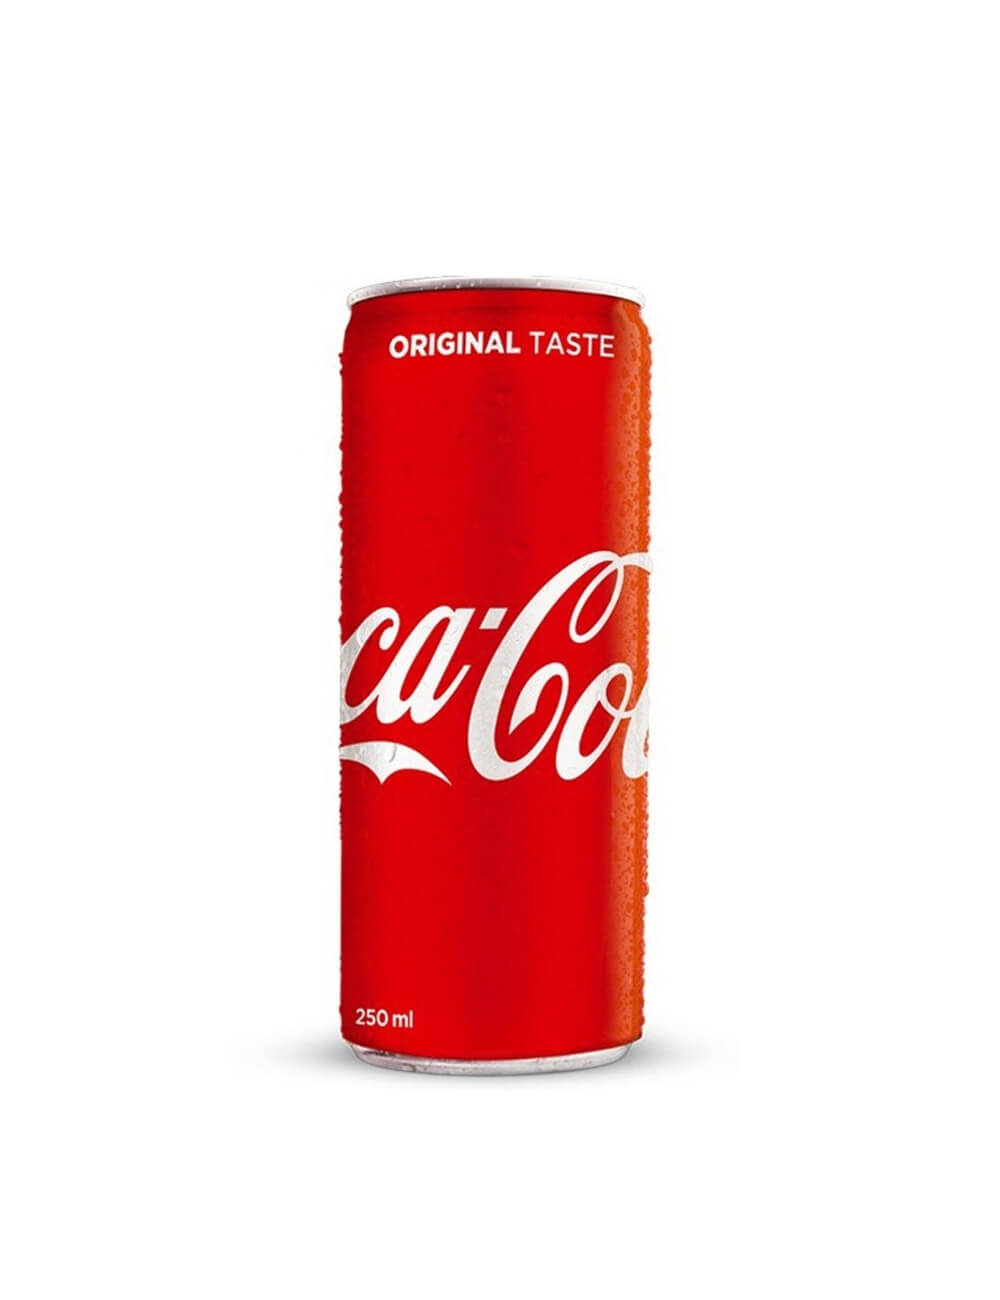 https://gecoshop.com/3909/coca-cola-original-taste-cassa-lattine-24-x-250-ml.jpg